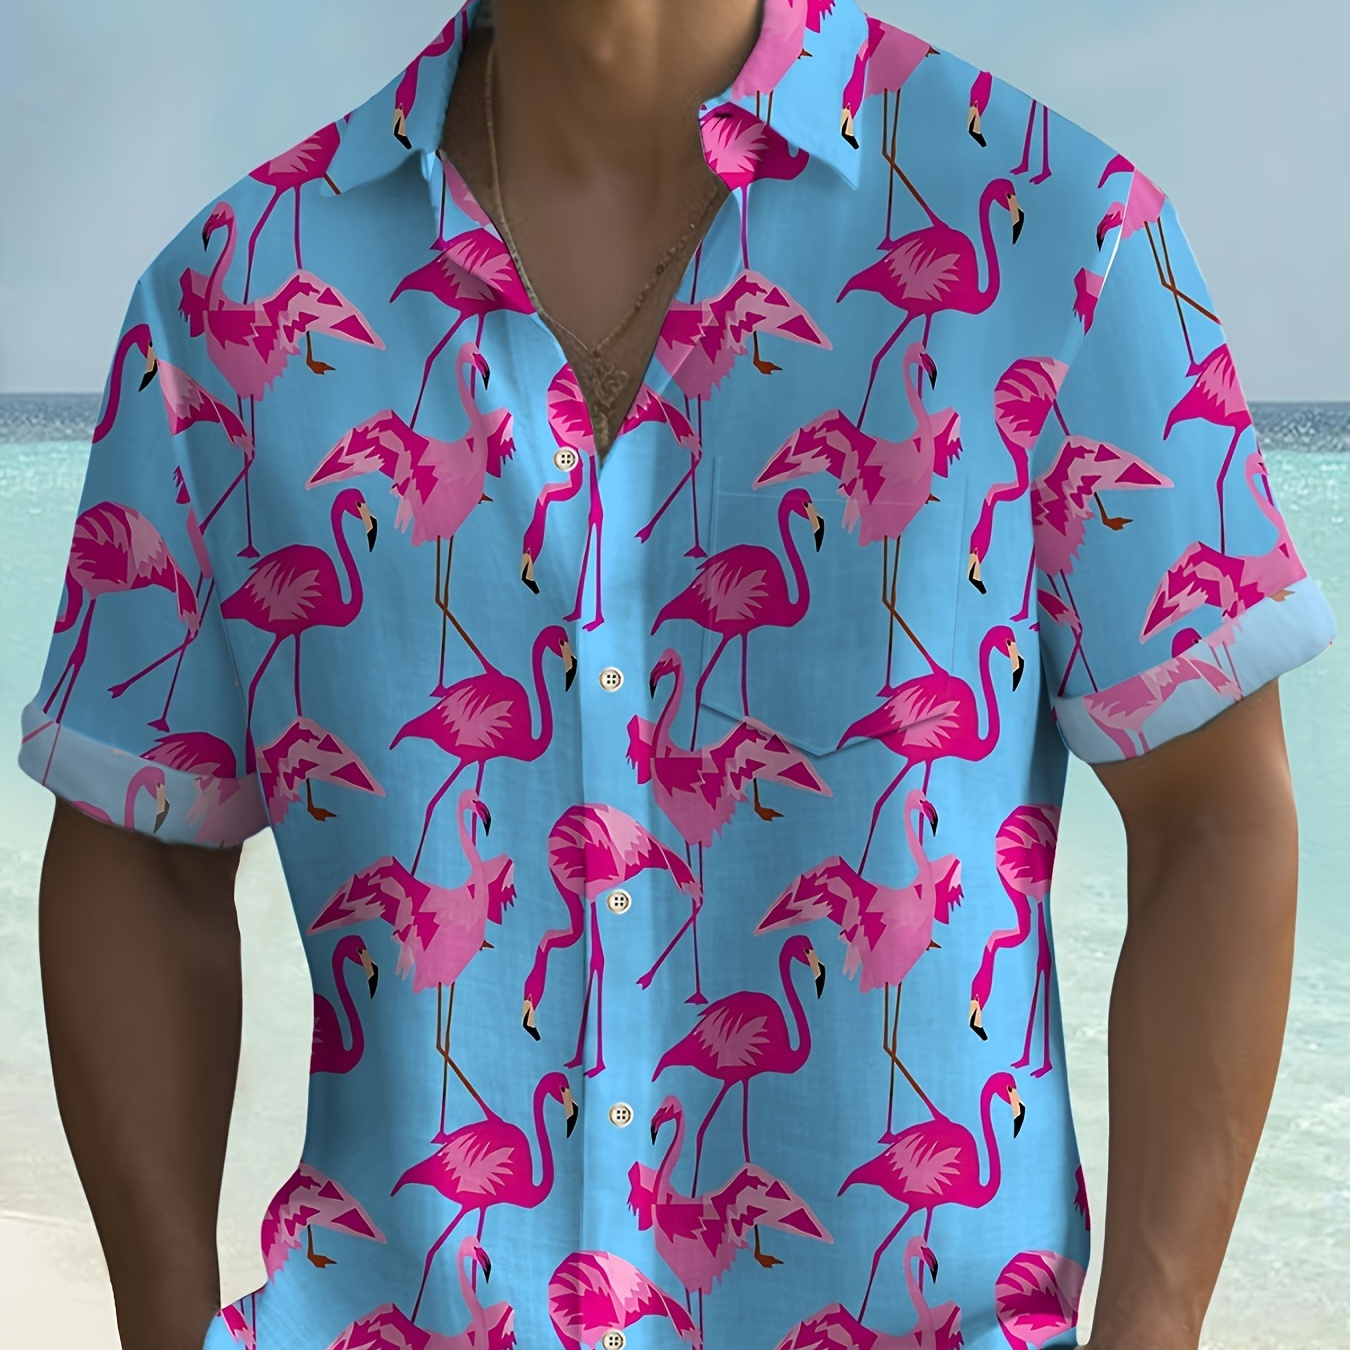 

Plus Size Men's Flamingo Graphic Print Shirt For Summer, Hawaiian Short Sleeve Shirt For Males